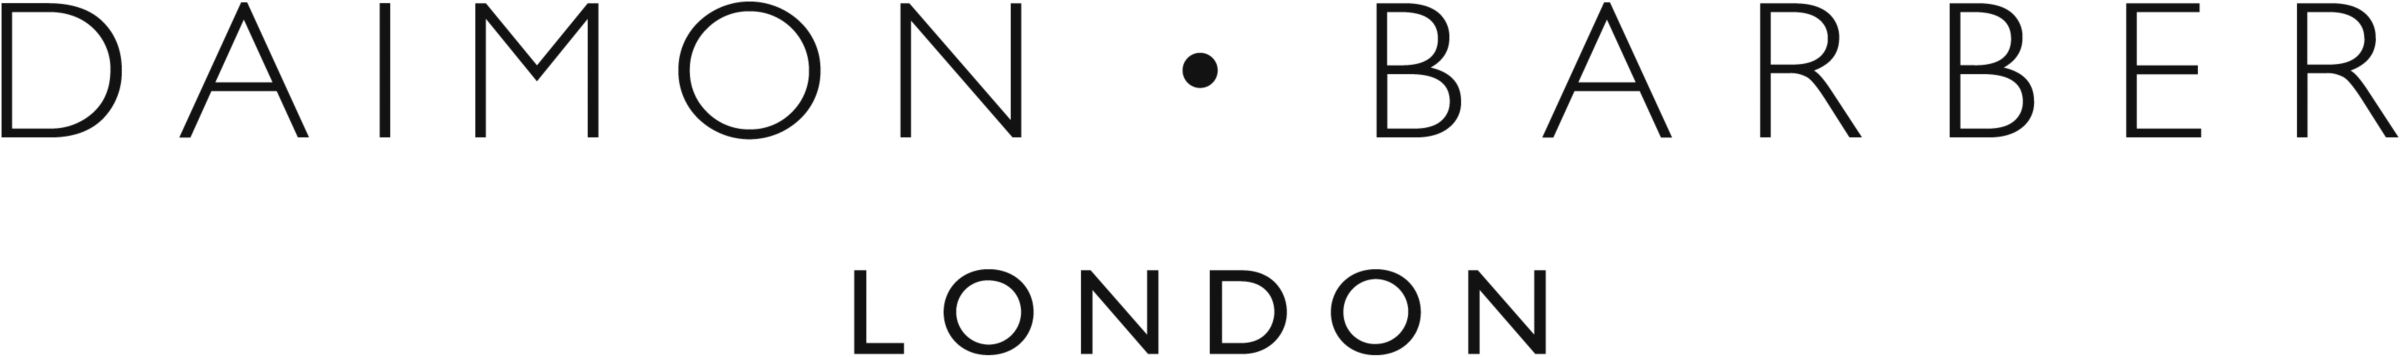 Daimon london logo